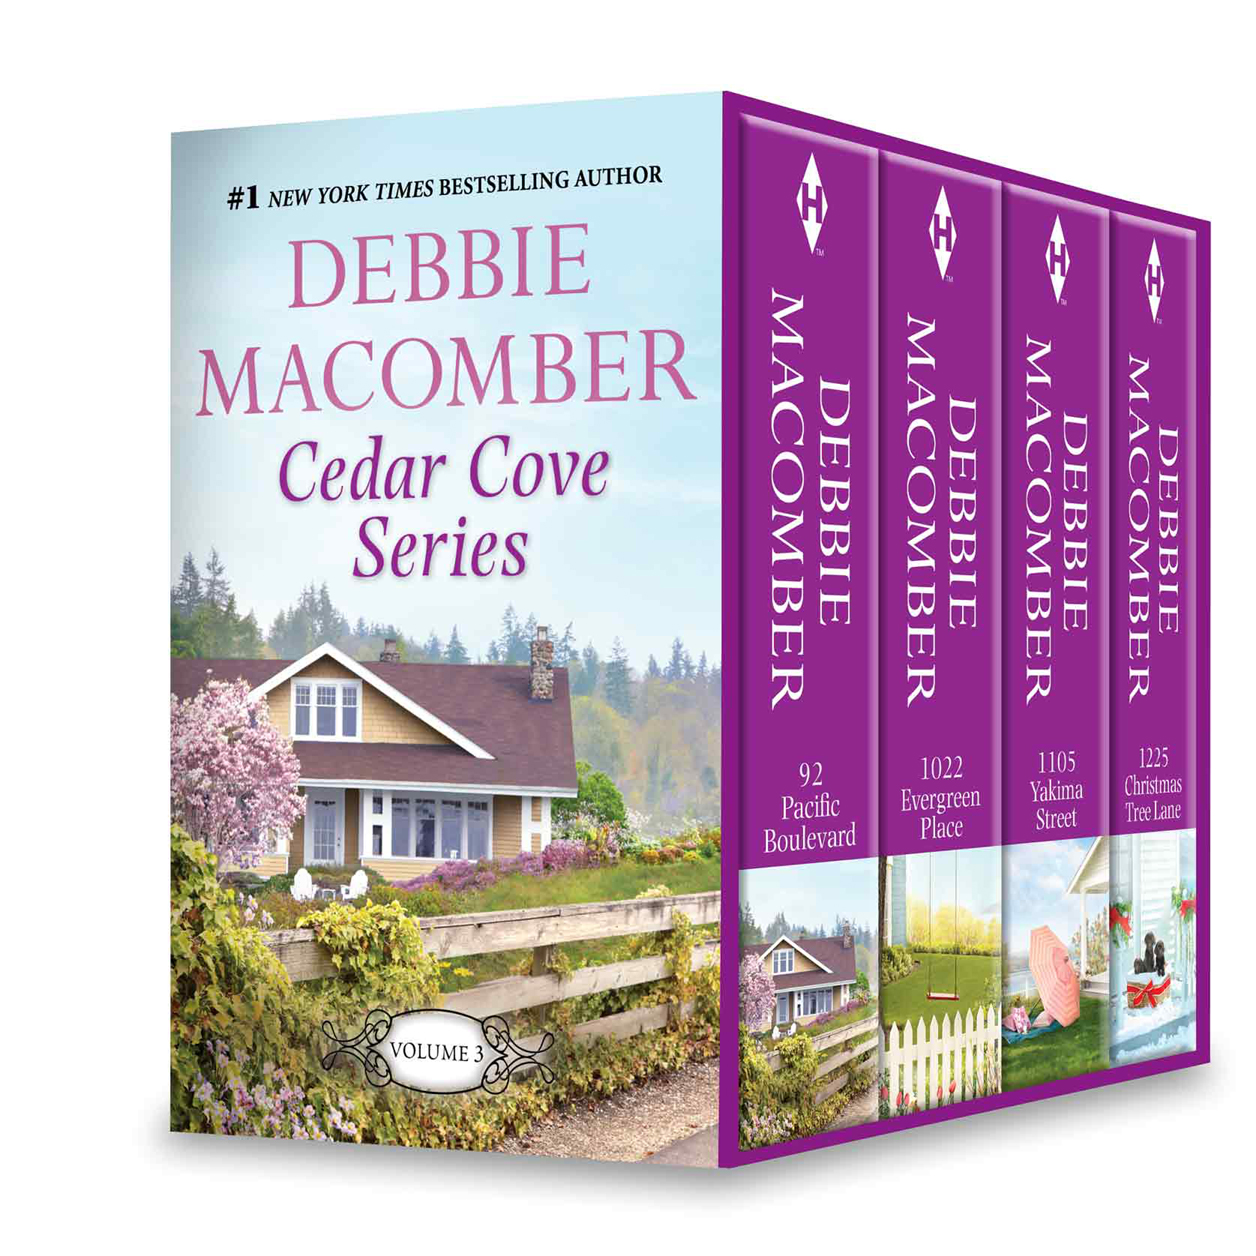 Debbie Macomber's Cedar Cove Series, Volume 3 (2014) by Debbie Macomber